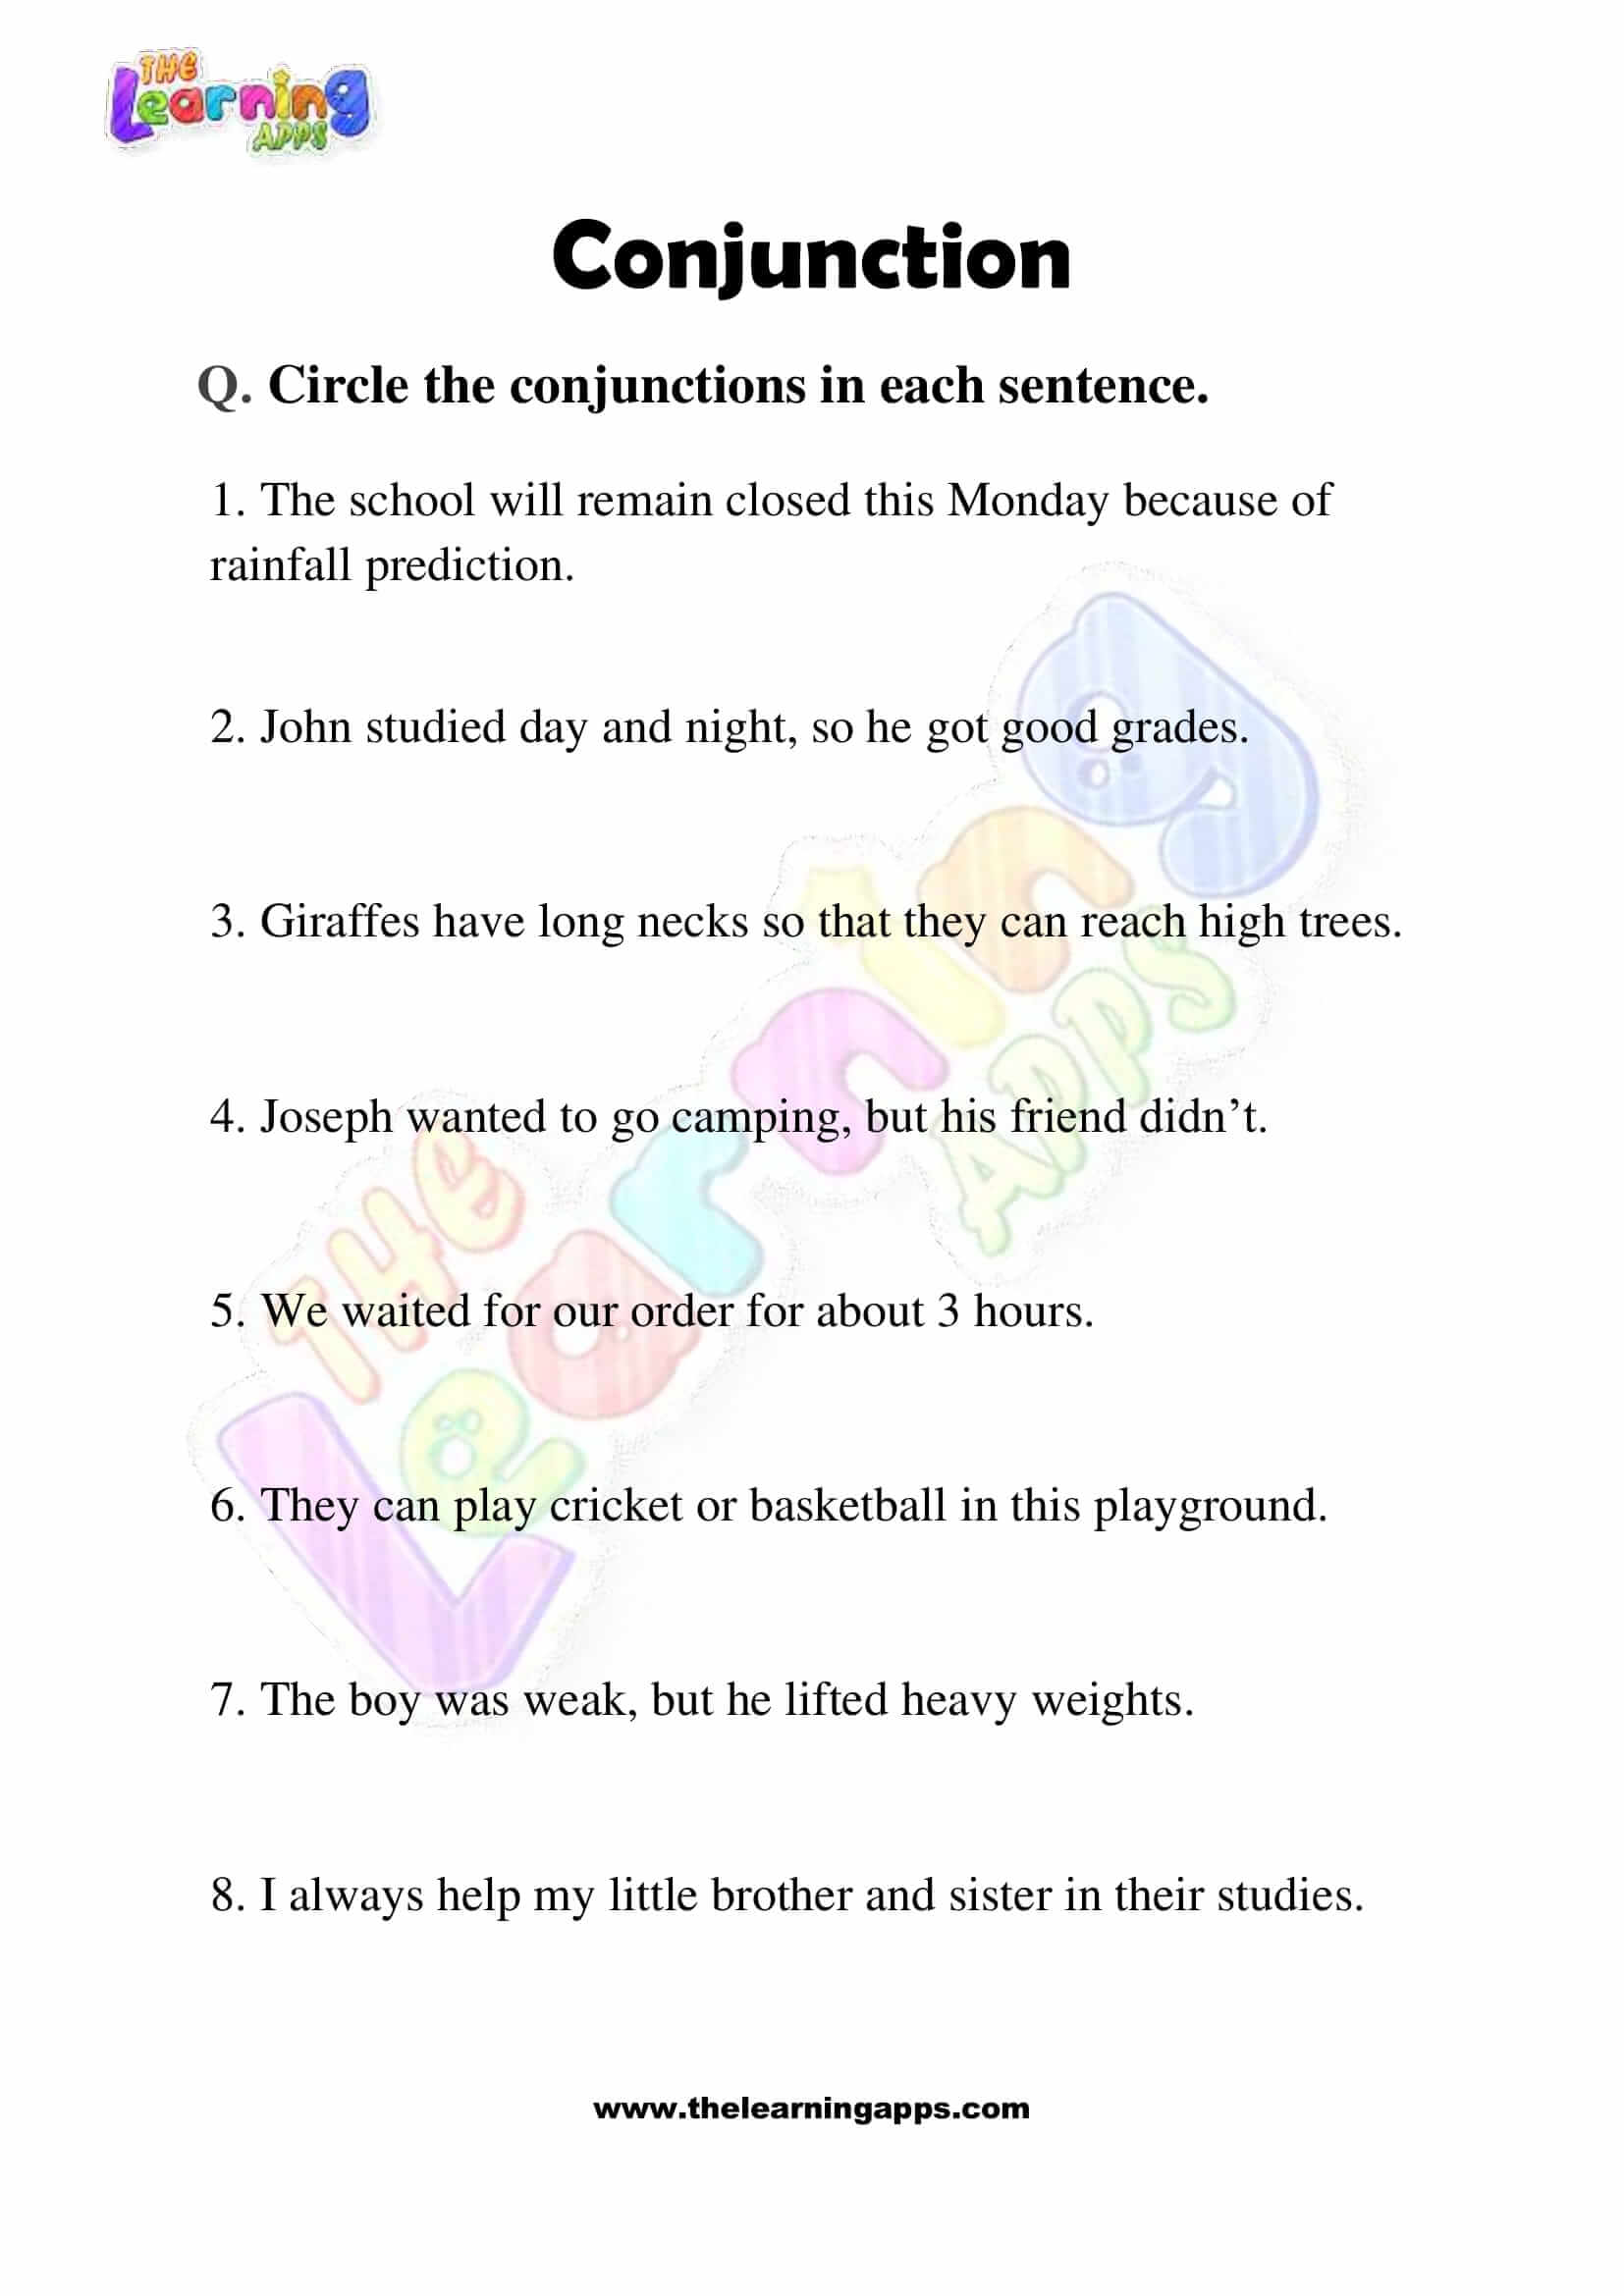 Conjunction Worksheets - Grade 3 - Activity 2